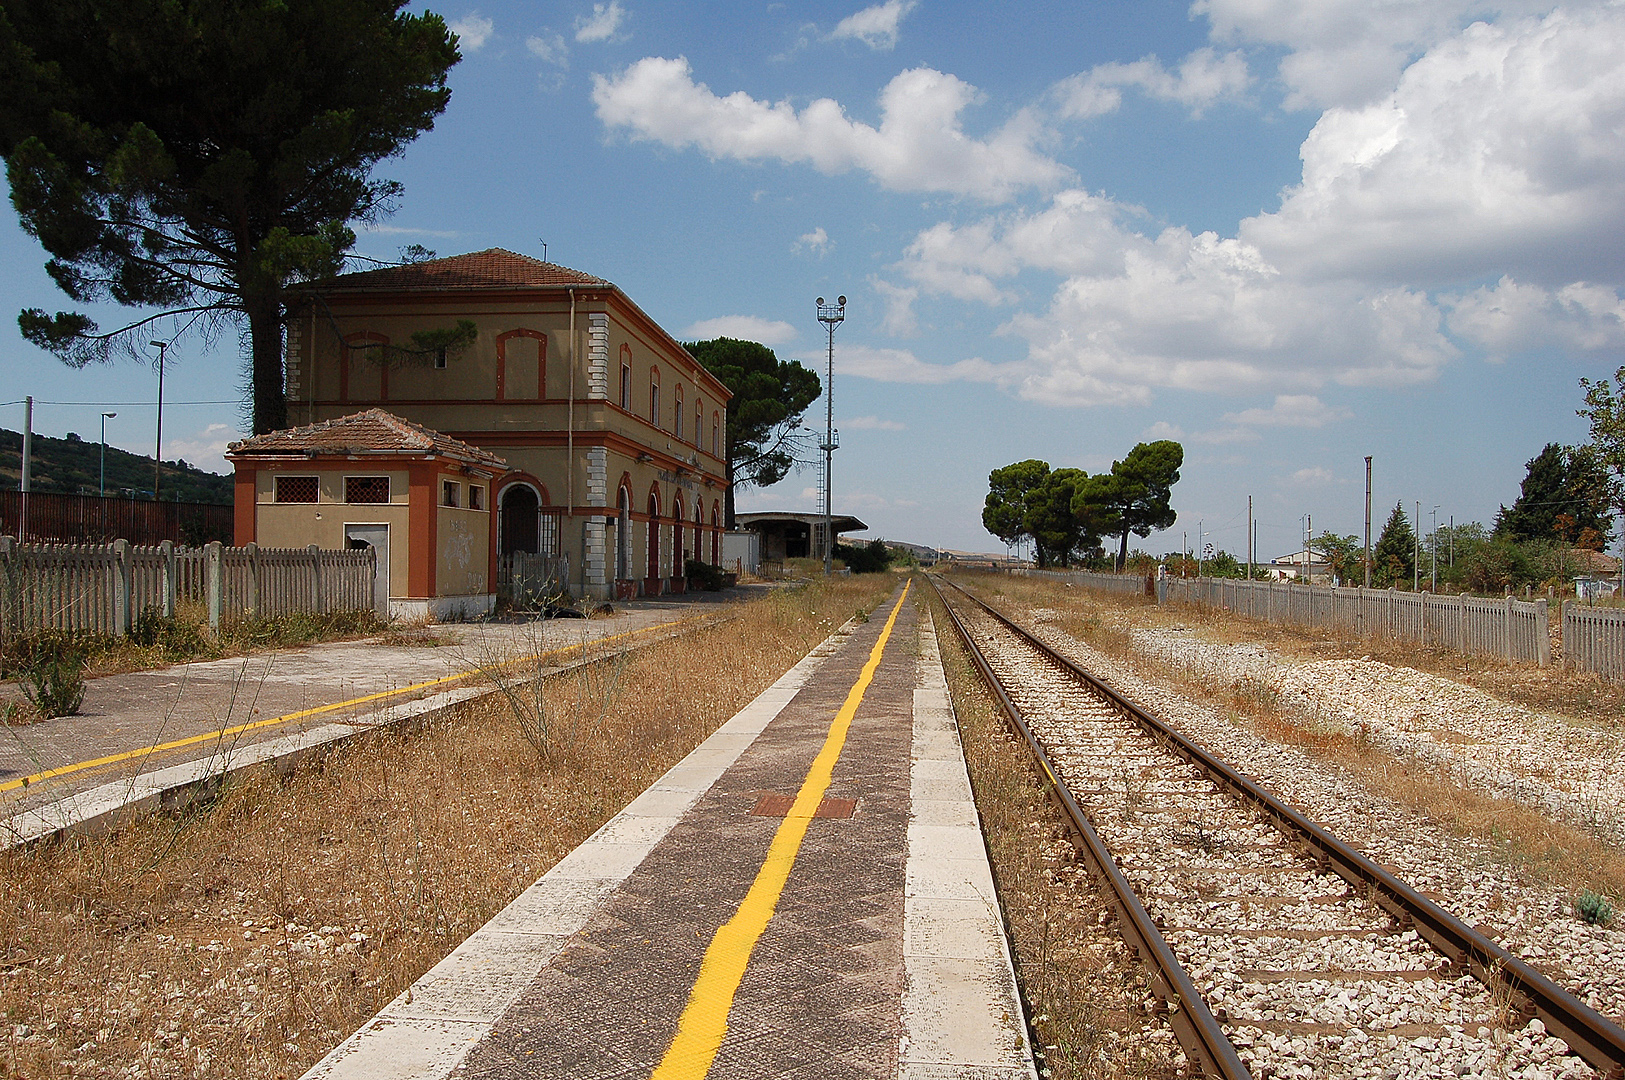 Verlaten spoorstation (Basilicata, Itali); Abandoned railway station (Basilicata, Italy)